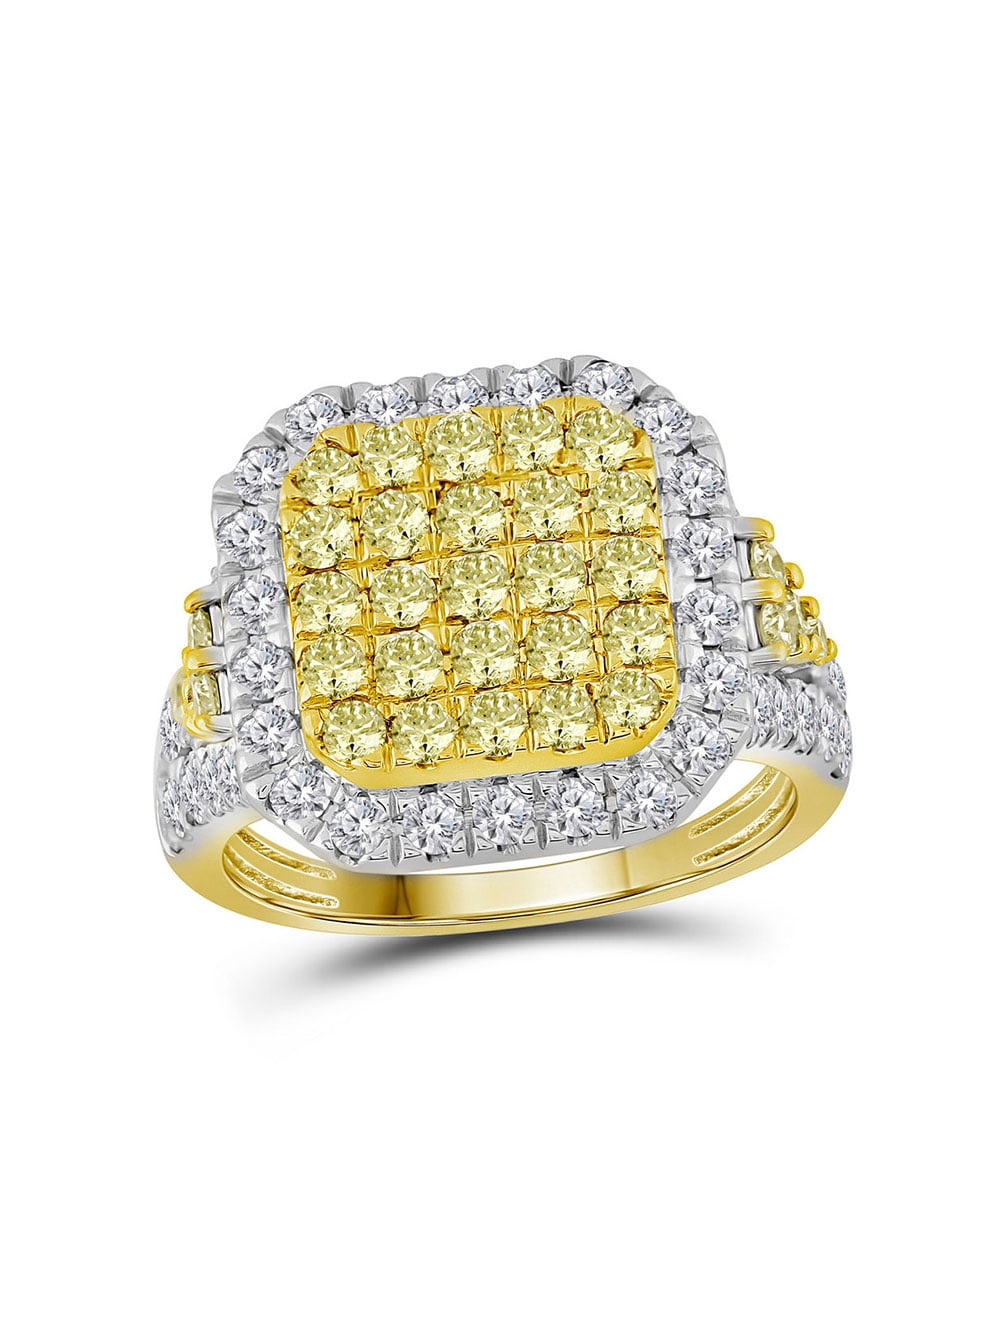 Fabulous 2 Row Engagement Wedding Men's Ring 2.33Ct Diamond 14k Yellow Gold Over 